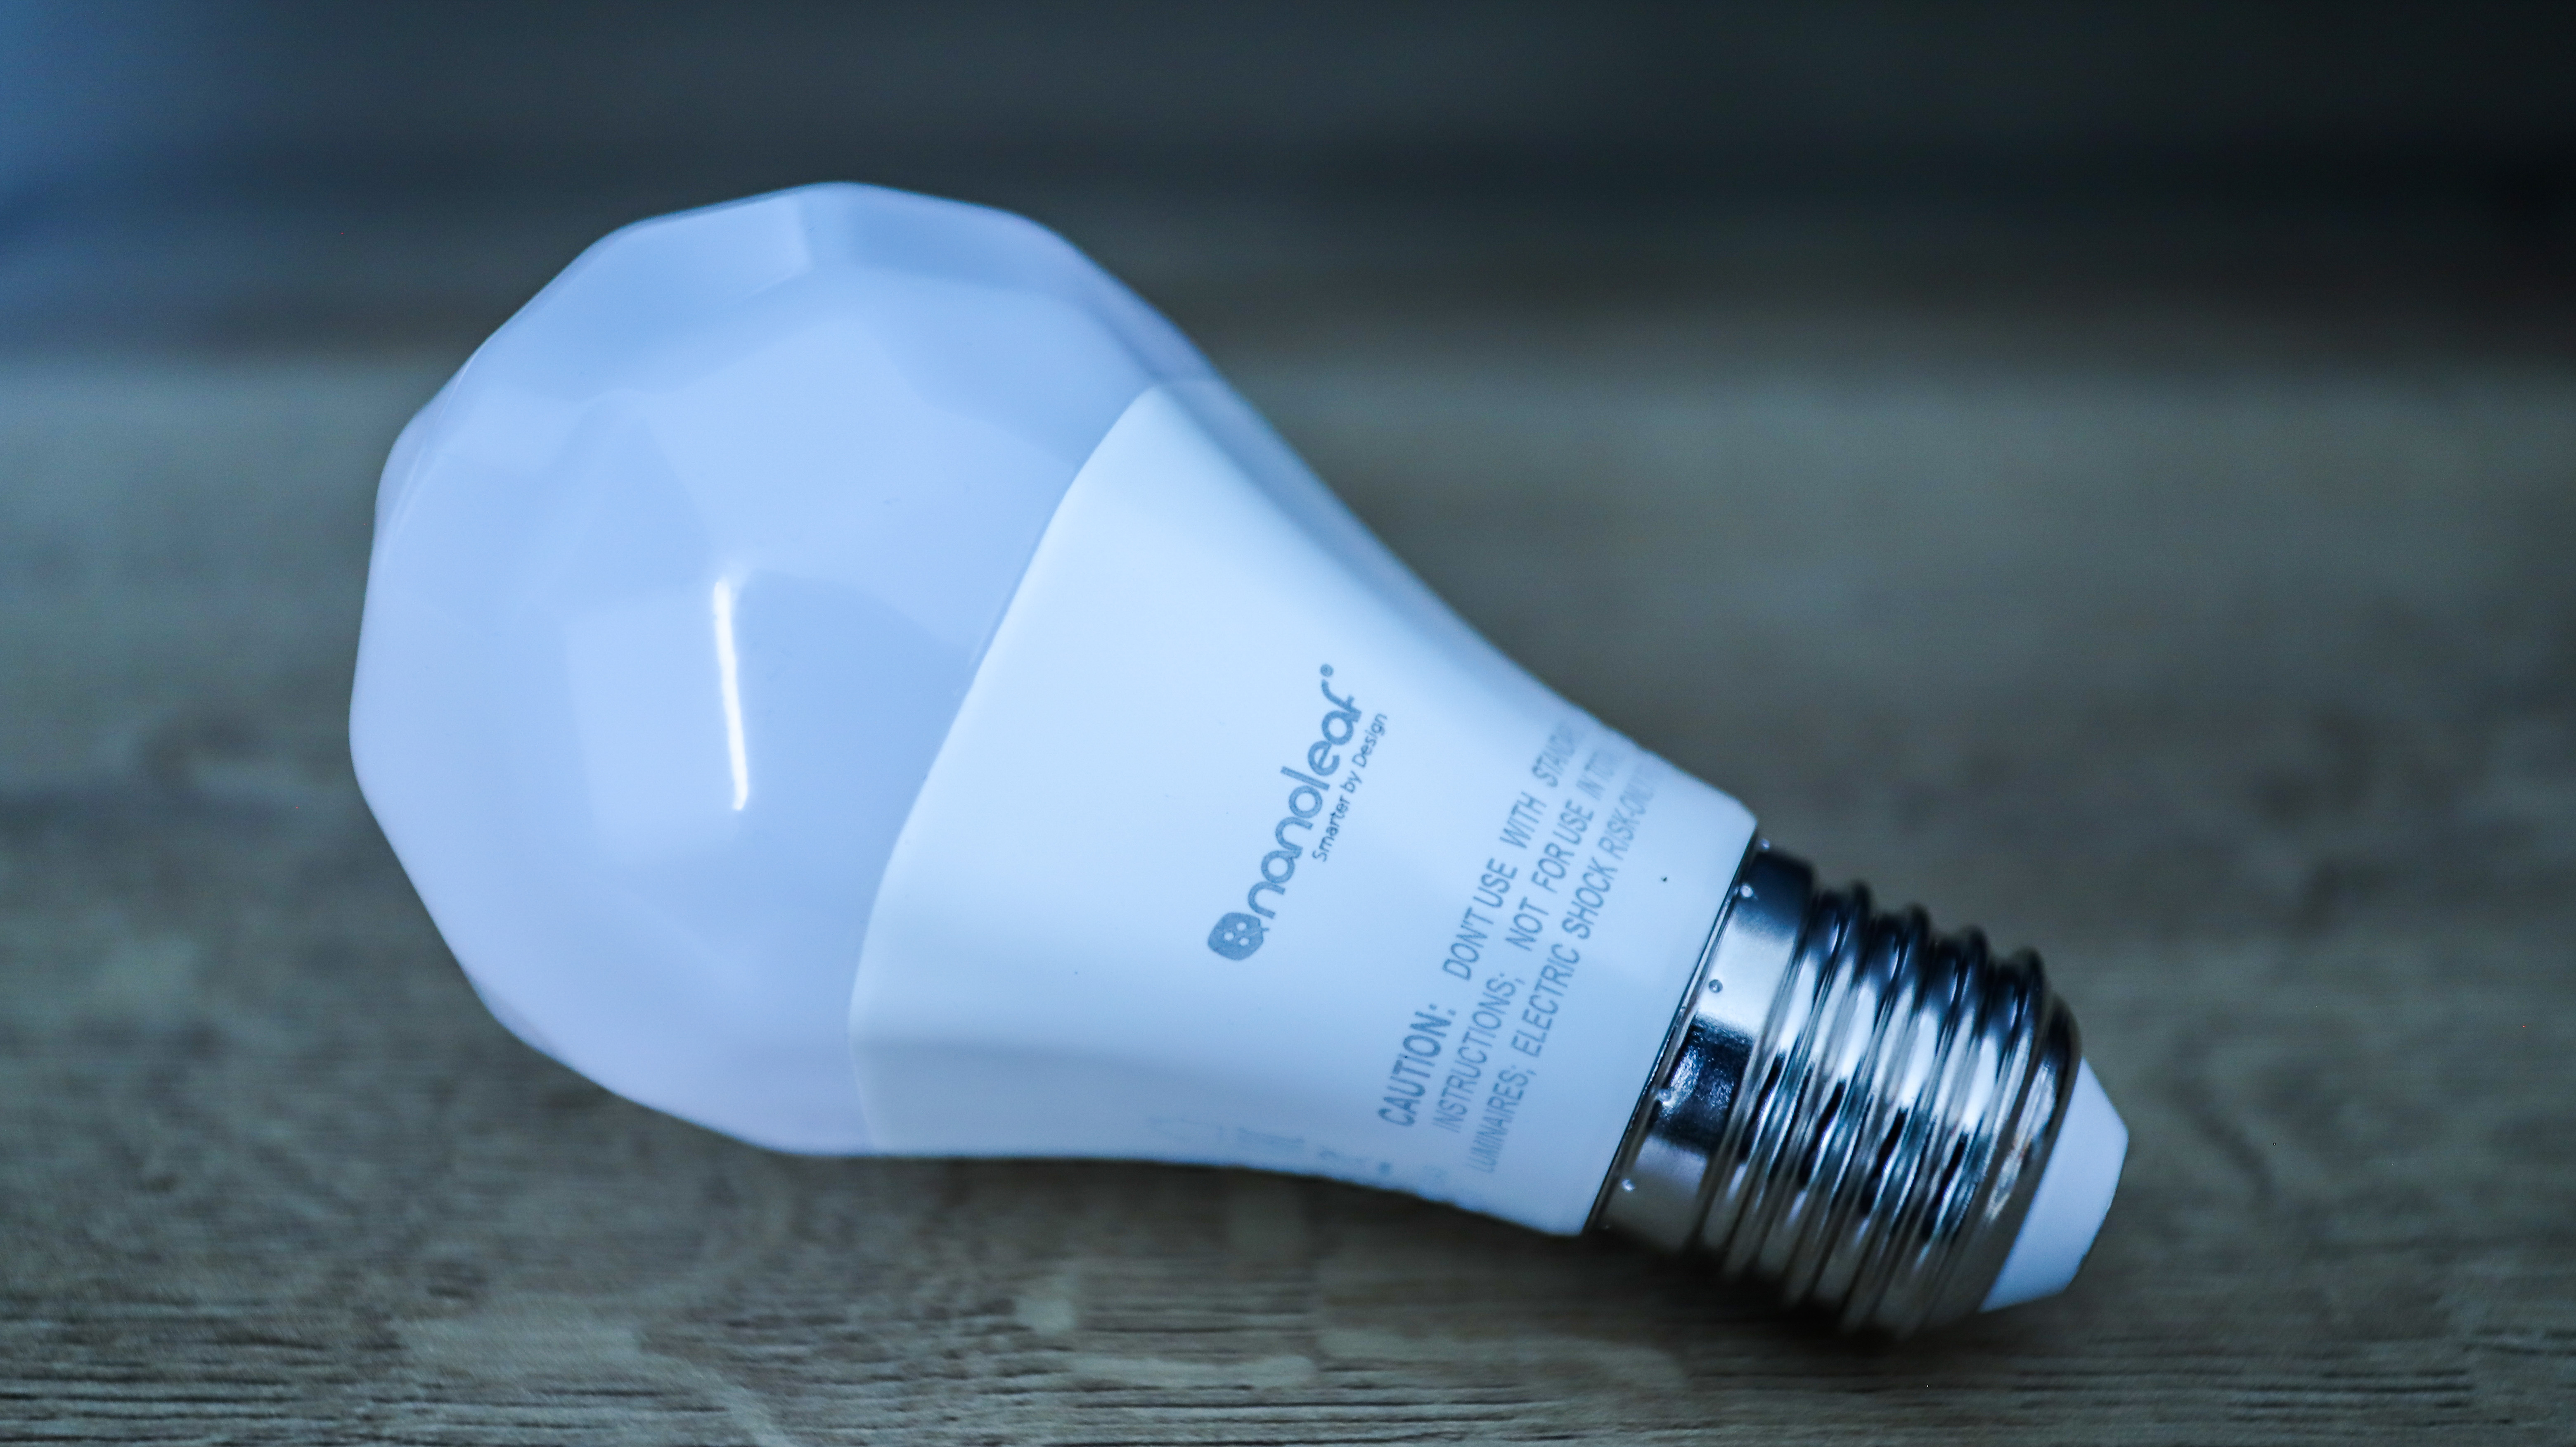 Nanoleaf Essentials smart bulb